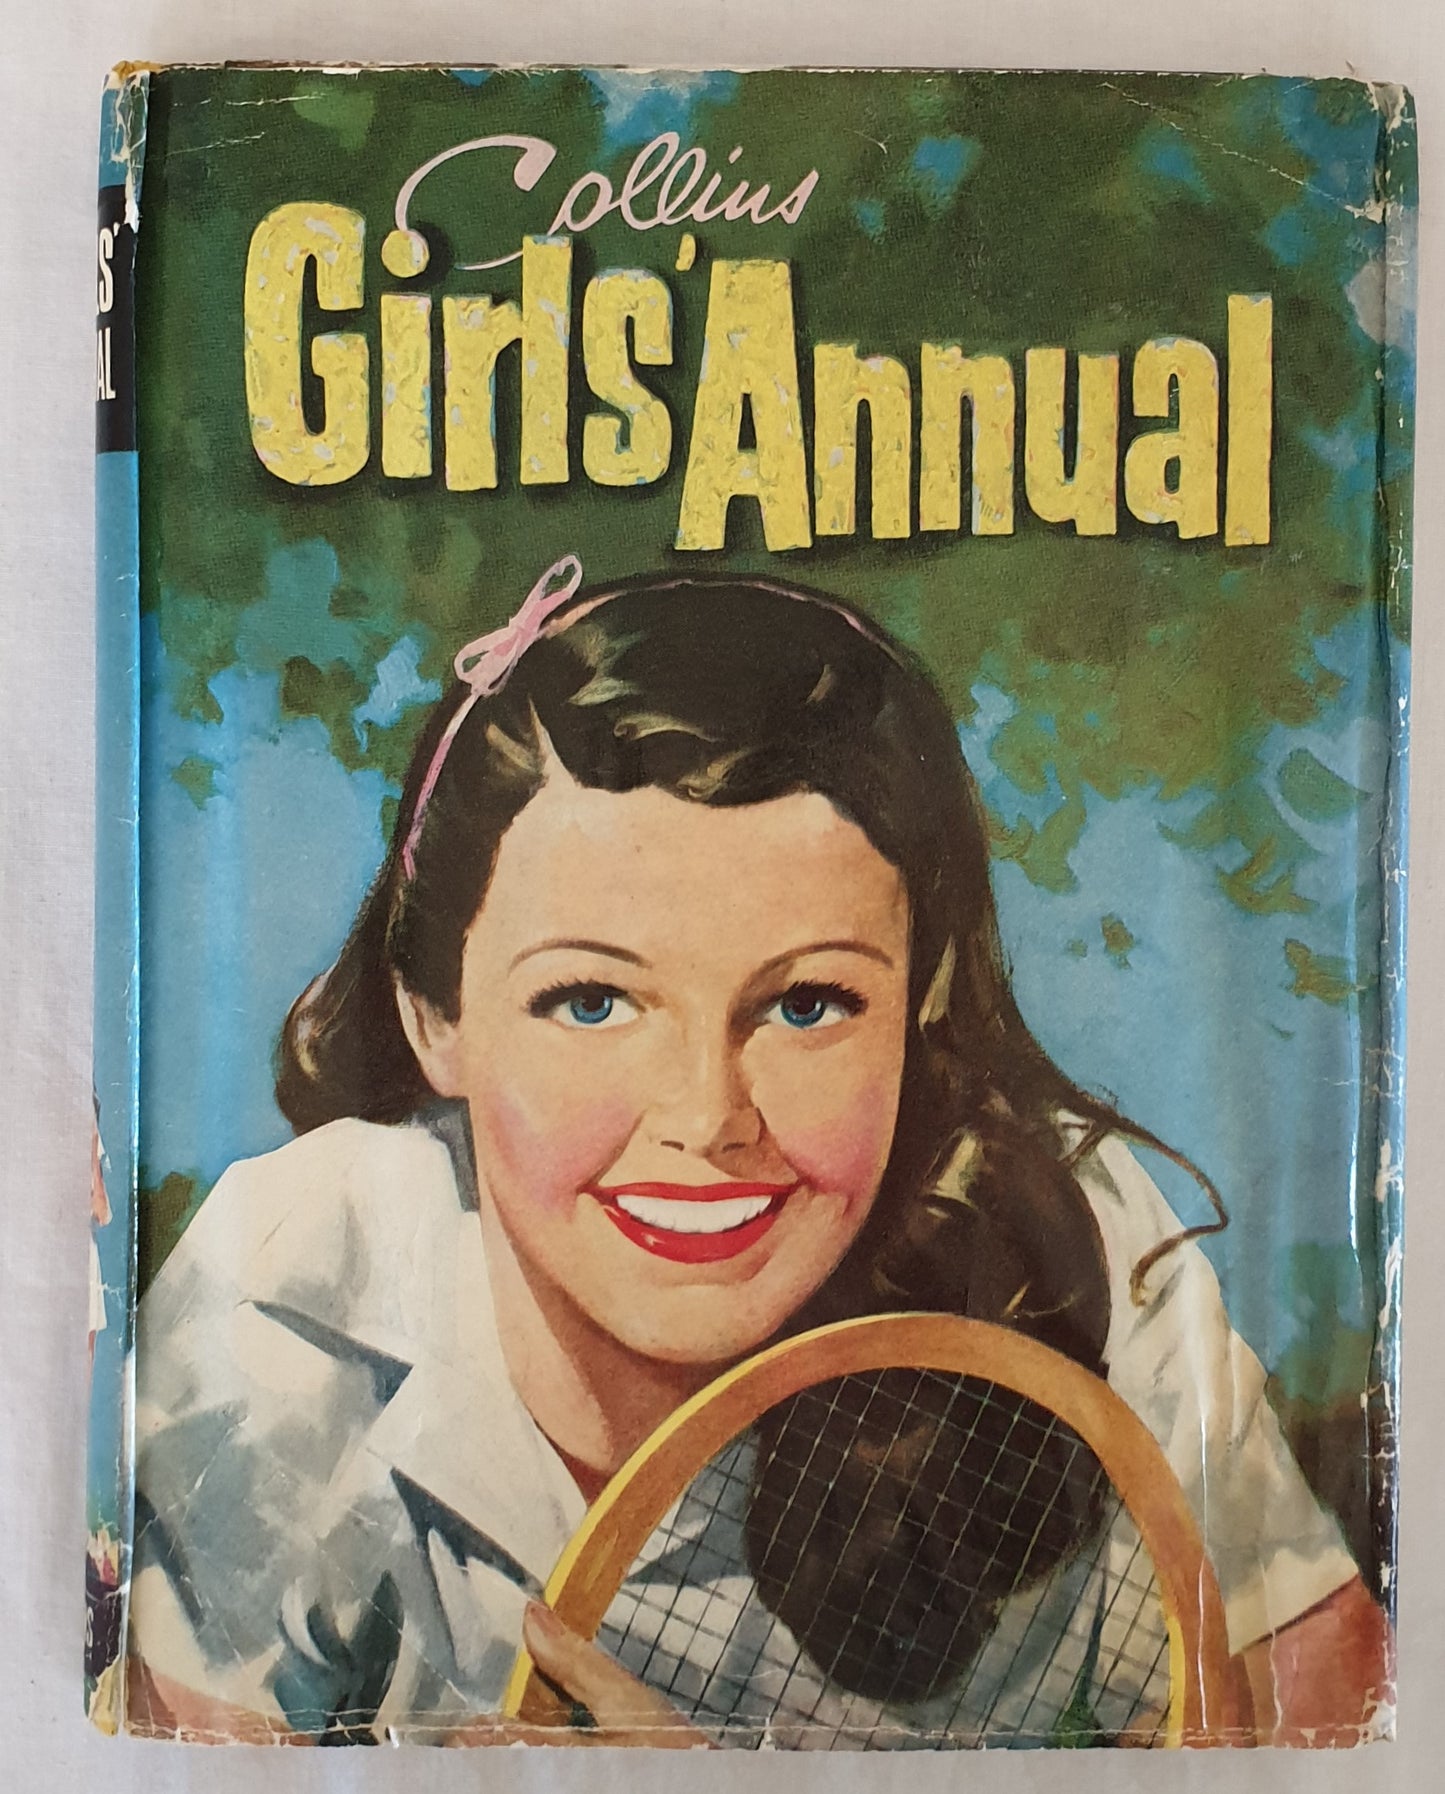 Collin's Girls Annual 1958